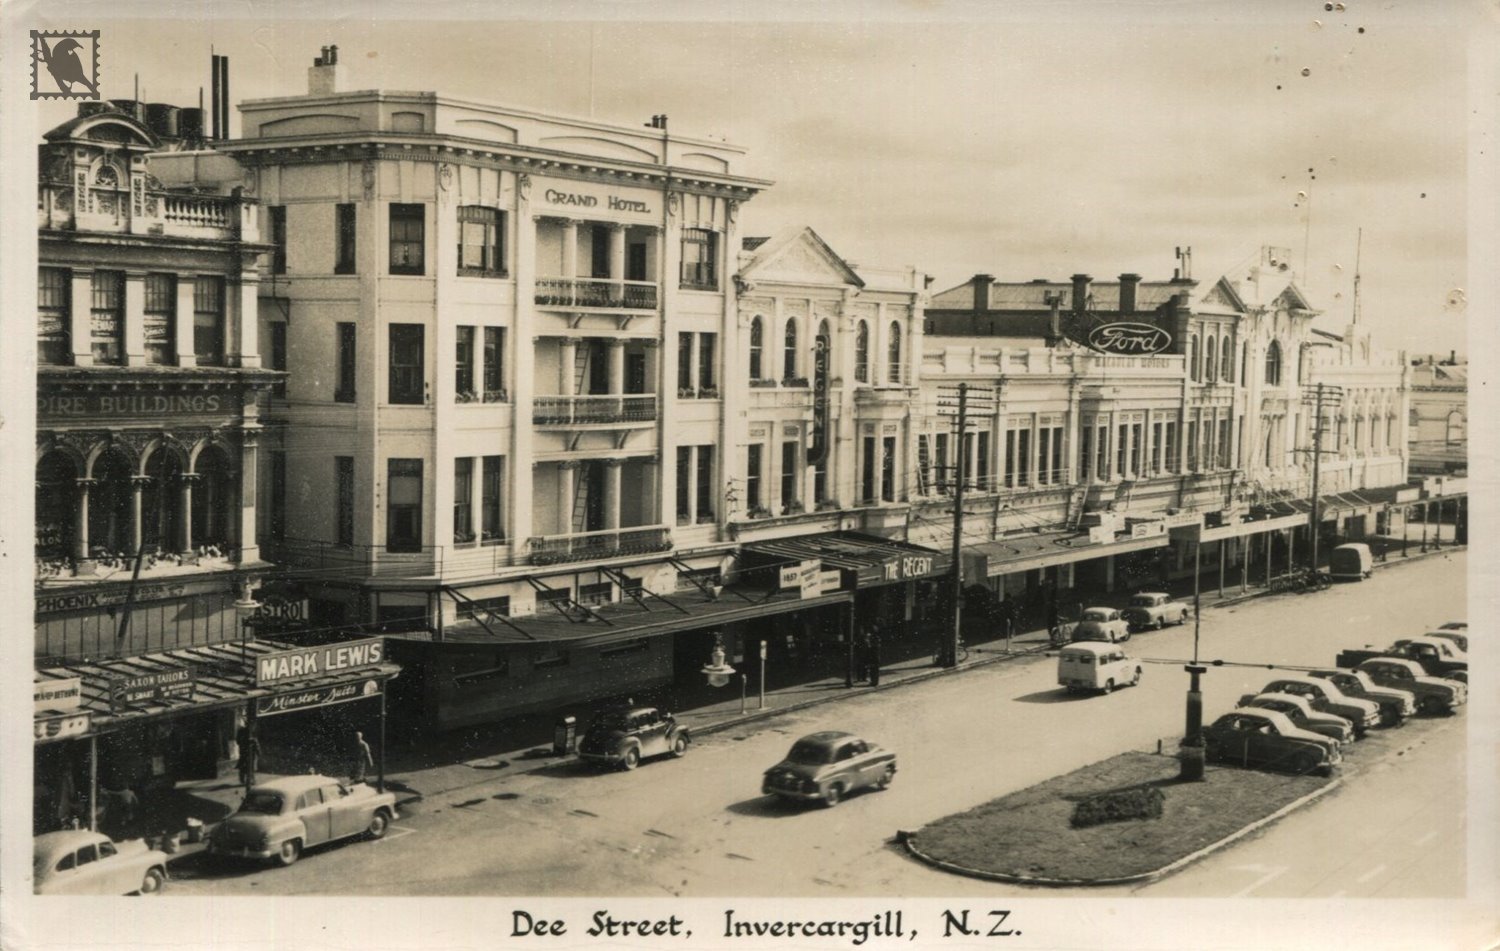 Invercargill-Dee Street